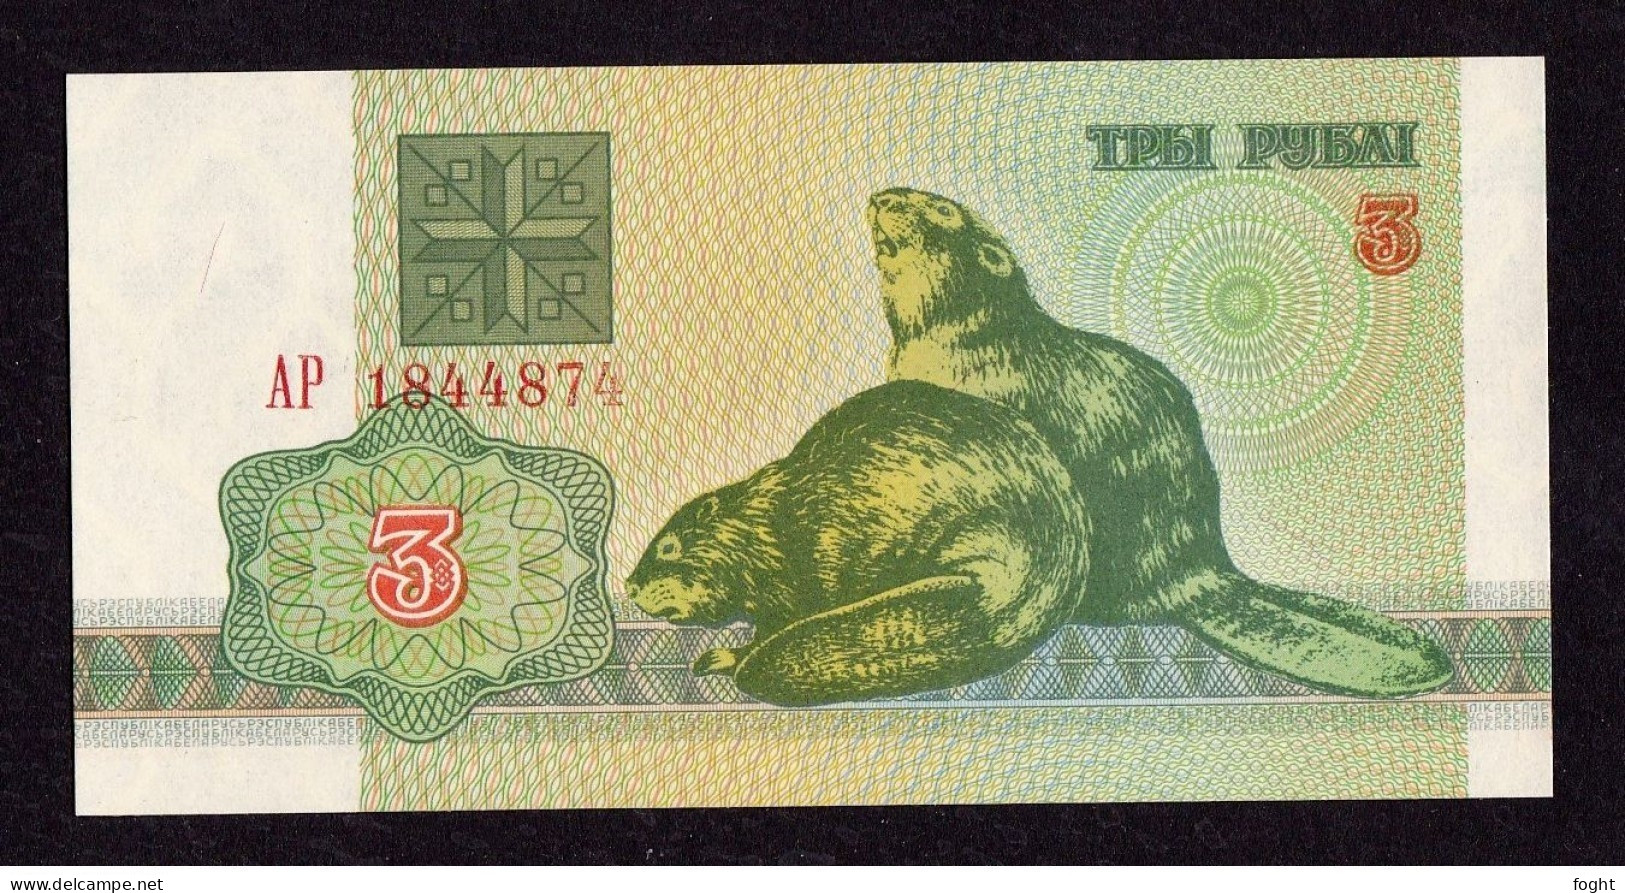 1992 АР Belarus Belarus National Bank Banknote 3 Rublei,P#3 - Bielorussia